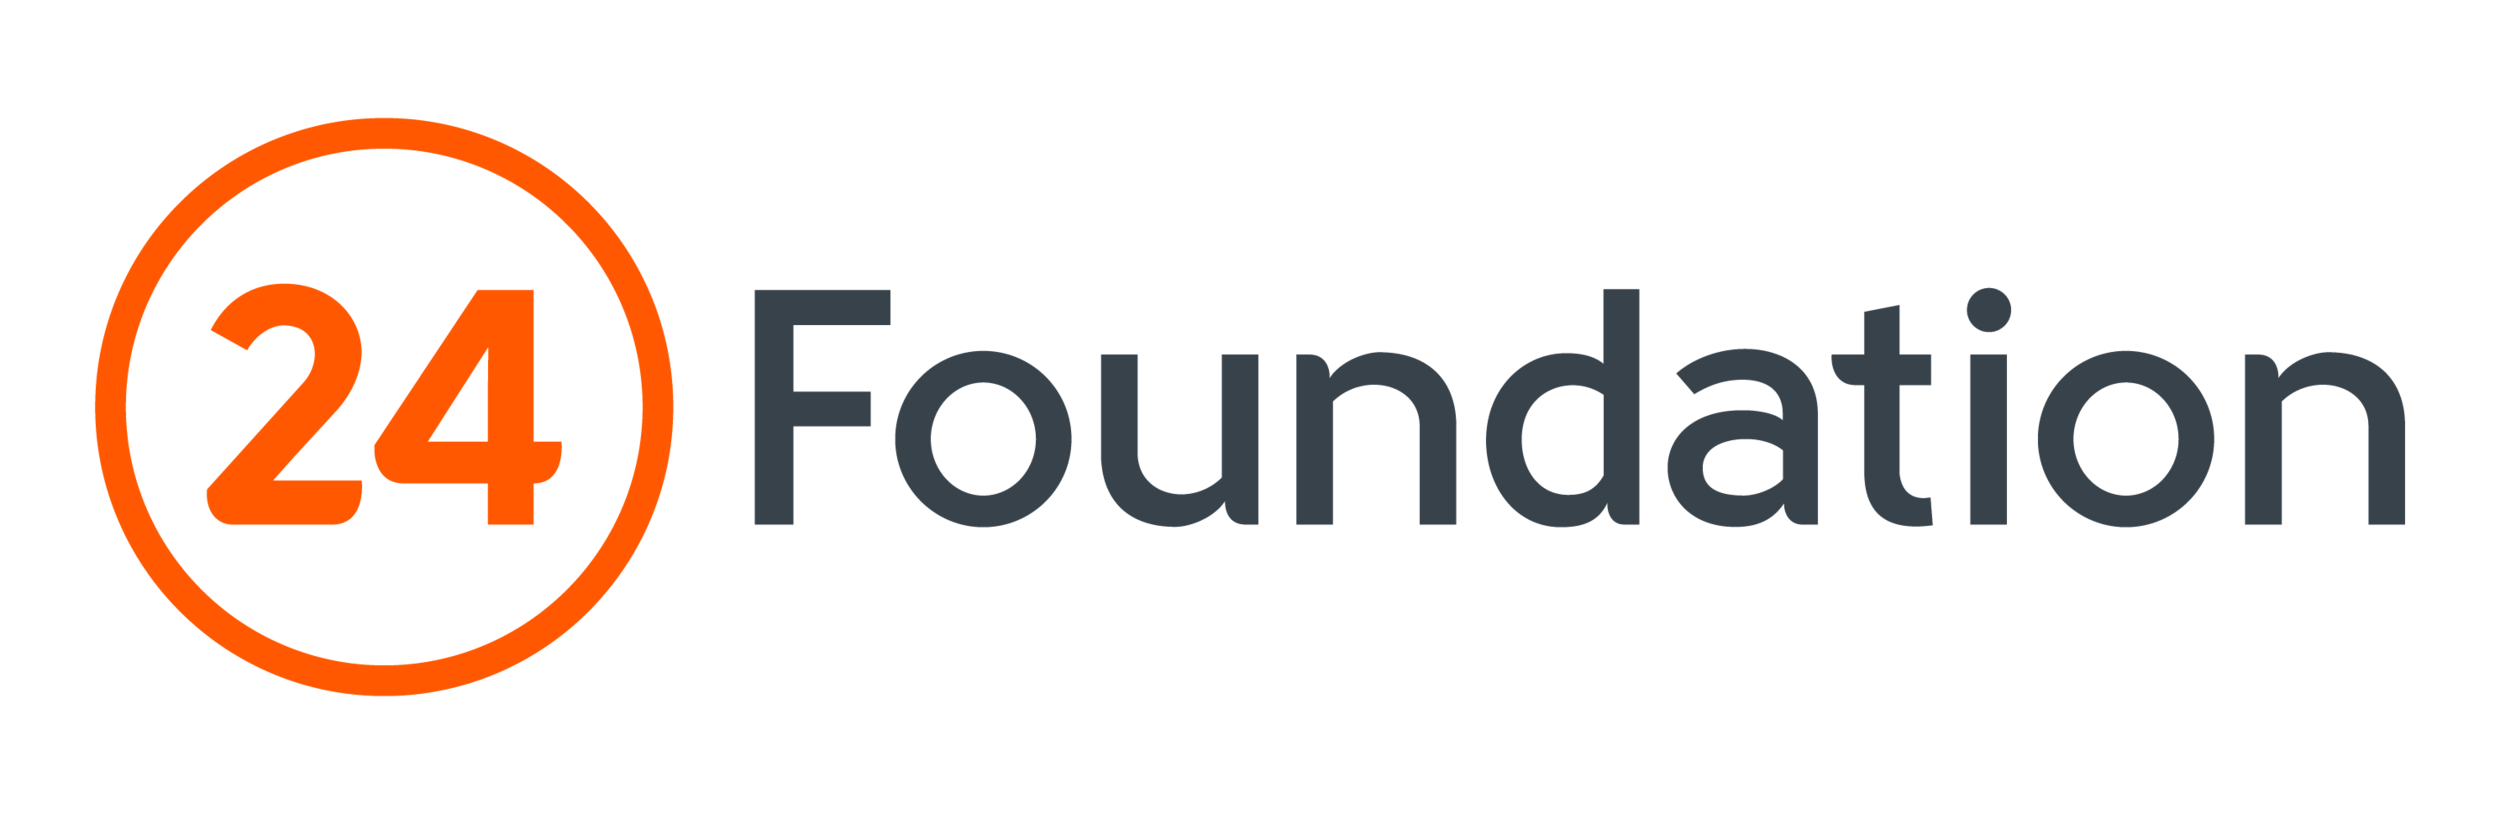 24_Foundation_Logotype_rgb.png